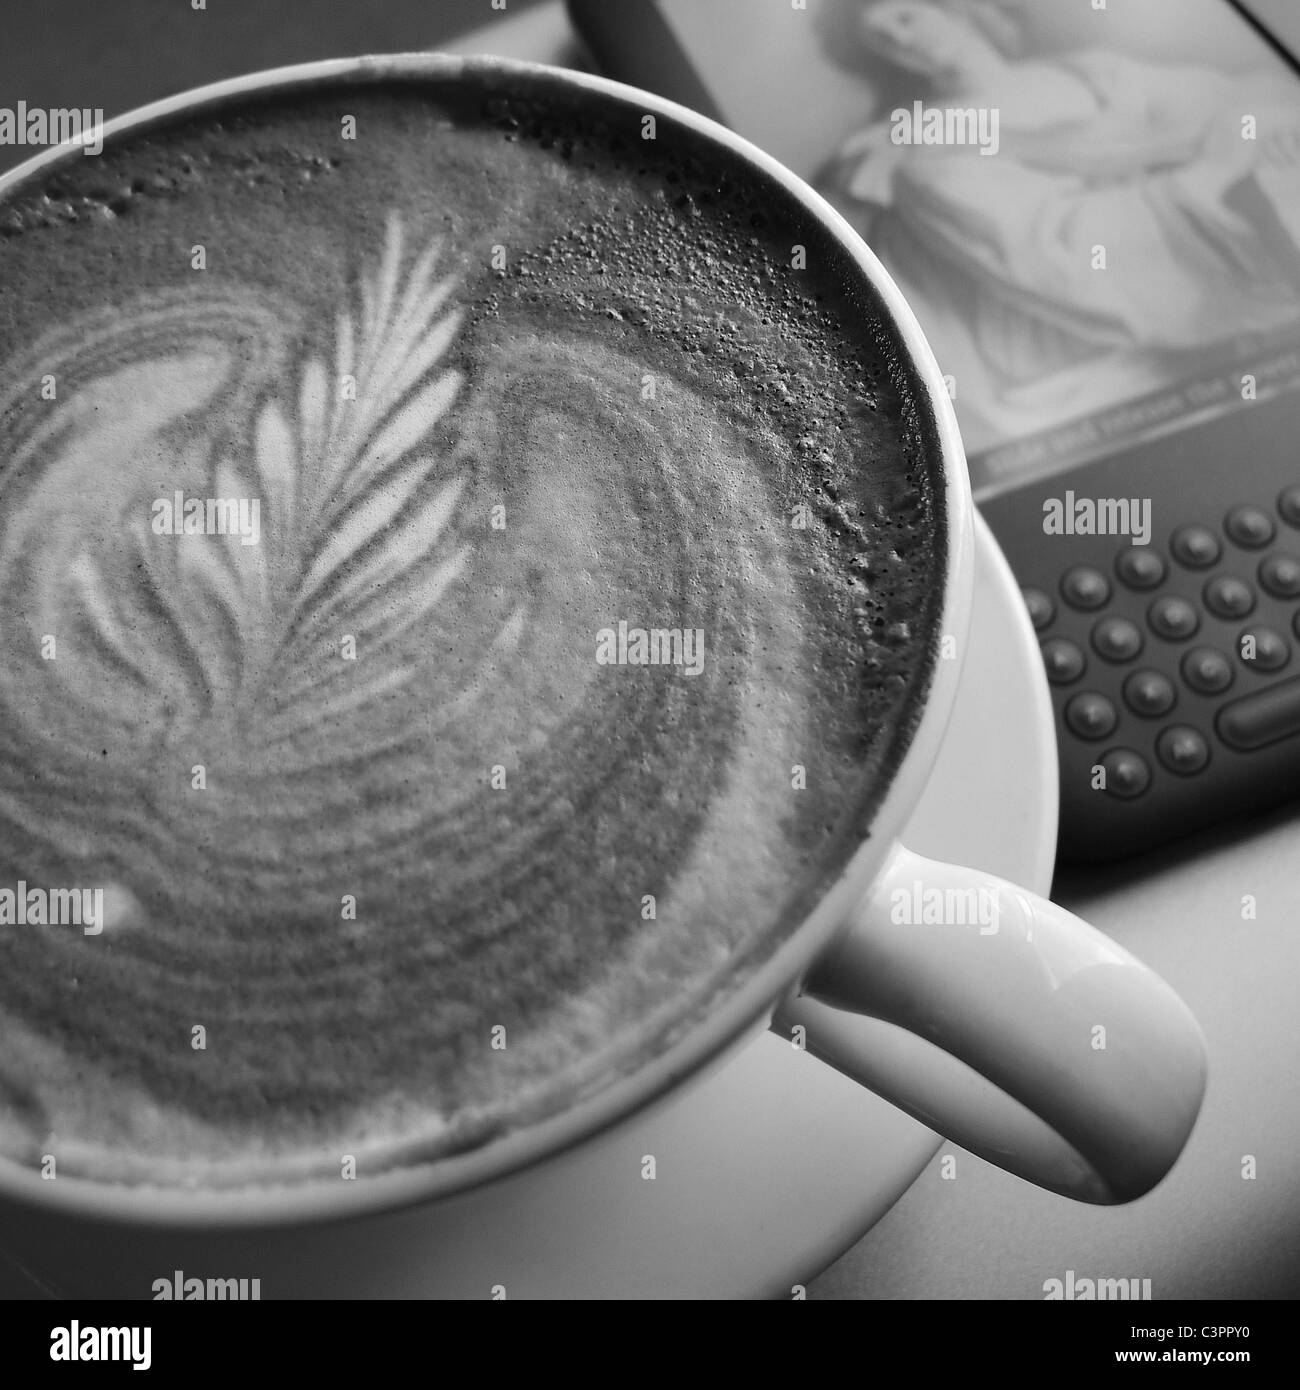 Cafe Latte with Amazon Kindle. Stock Photo